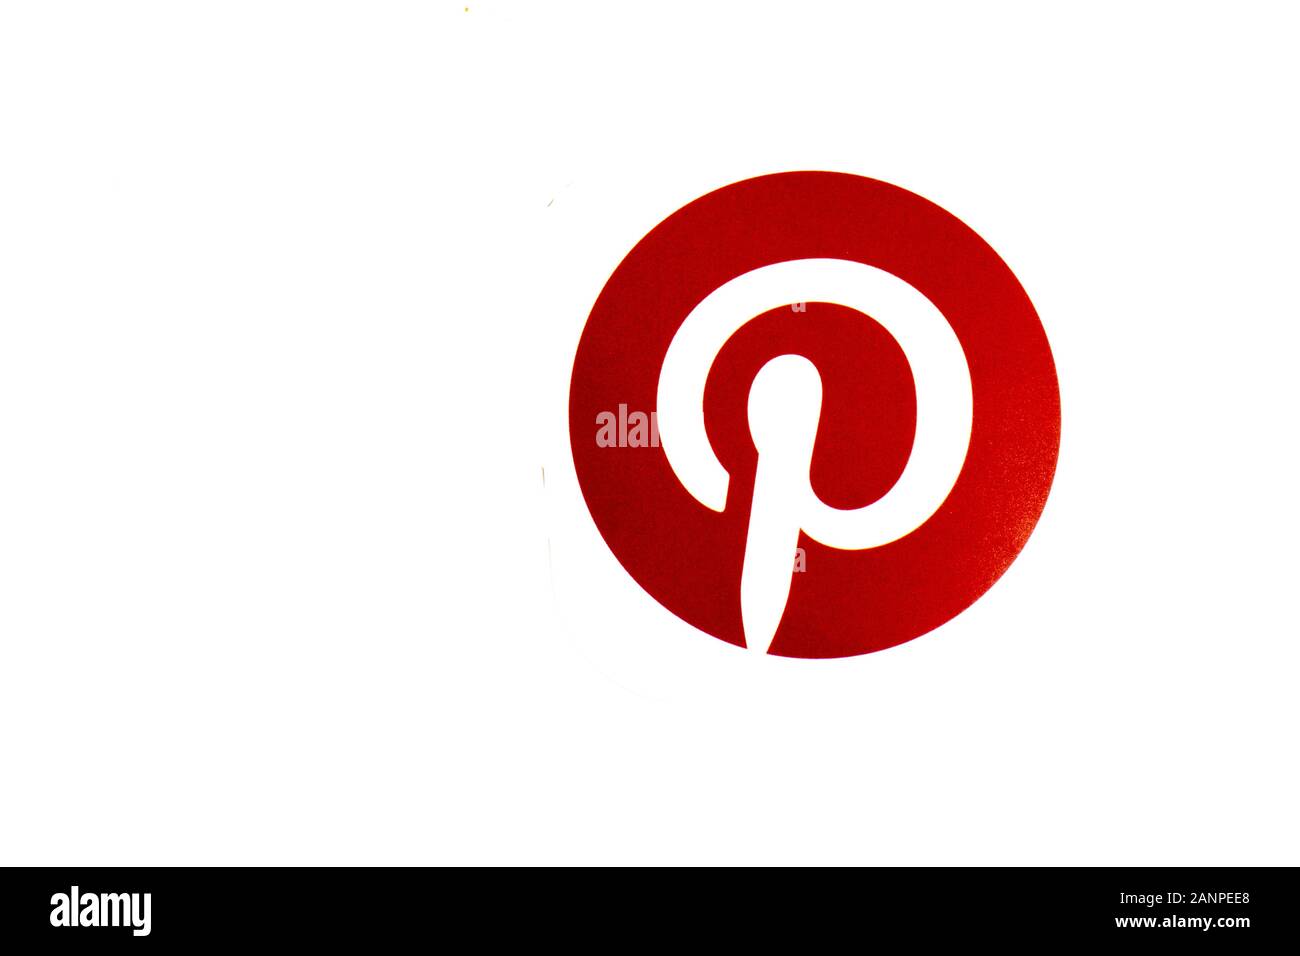 Los Angeles, California, USA - 17 January 2020: Pinterest logo with copy space, Illustrative Editorial Stock Photo